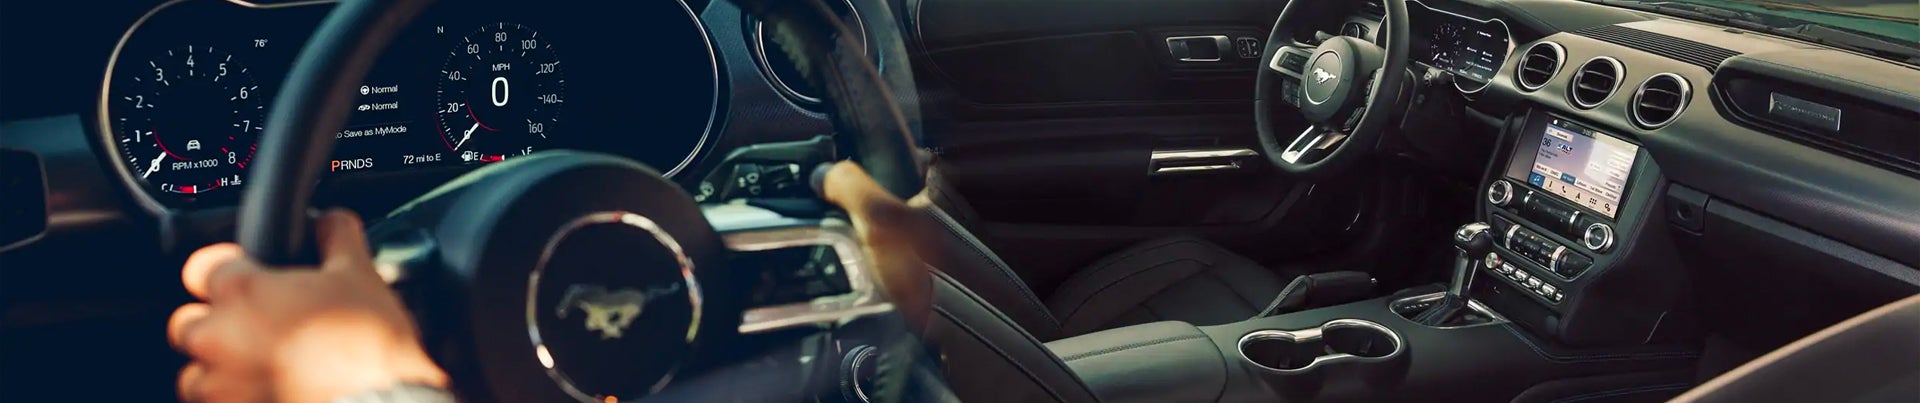 2019 Ford Mustang Interior